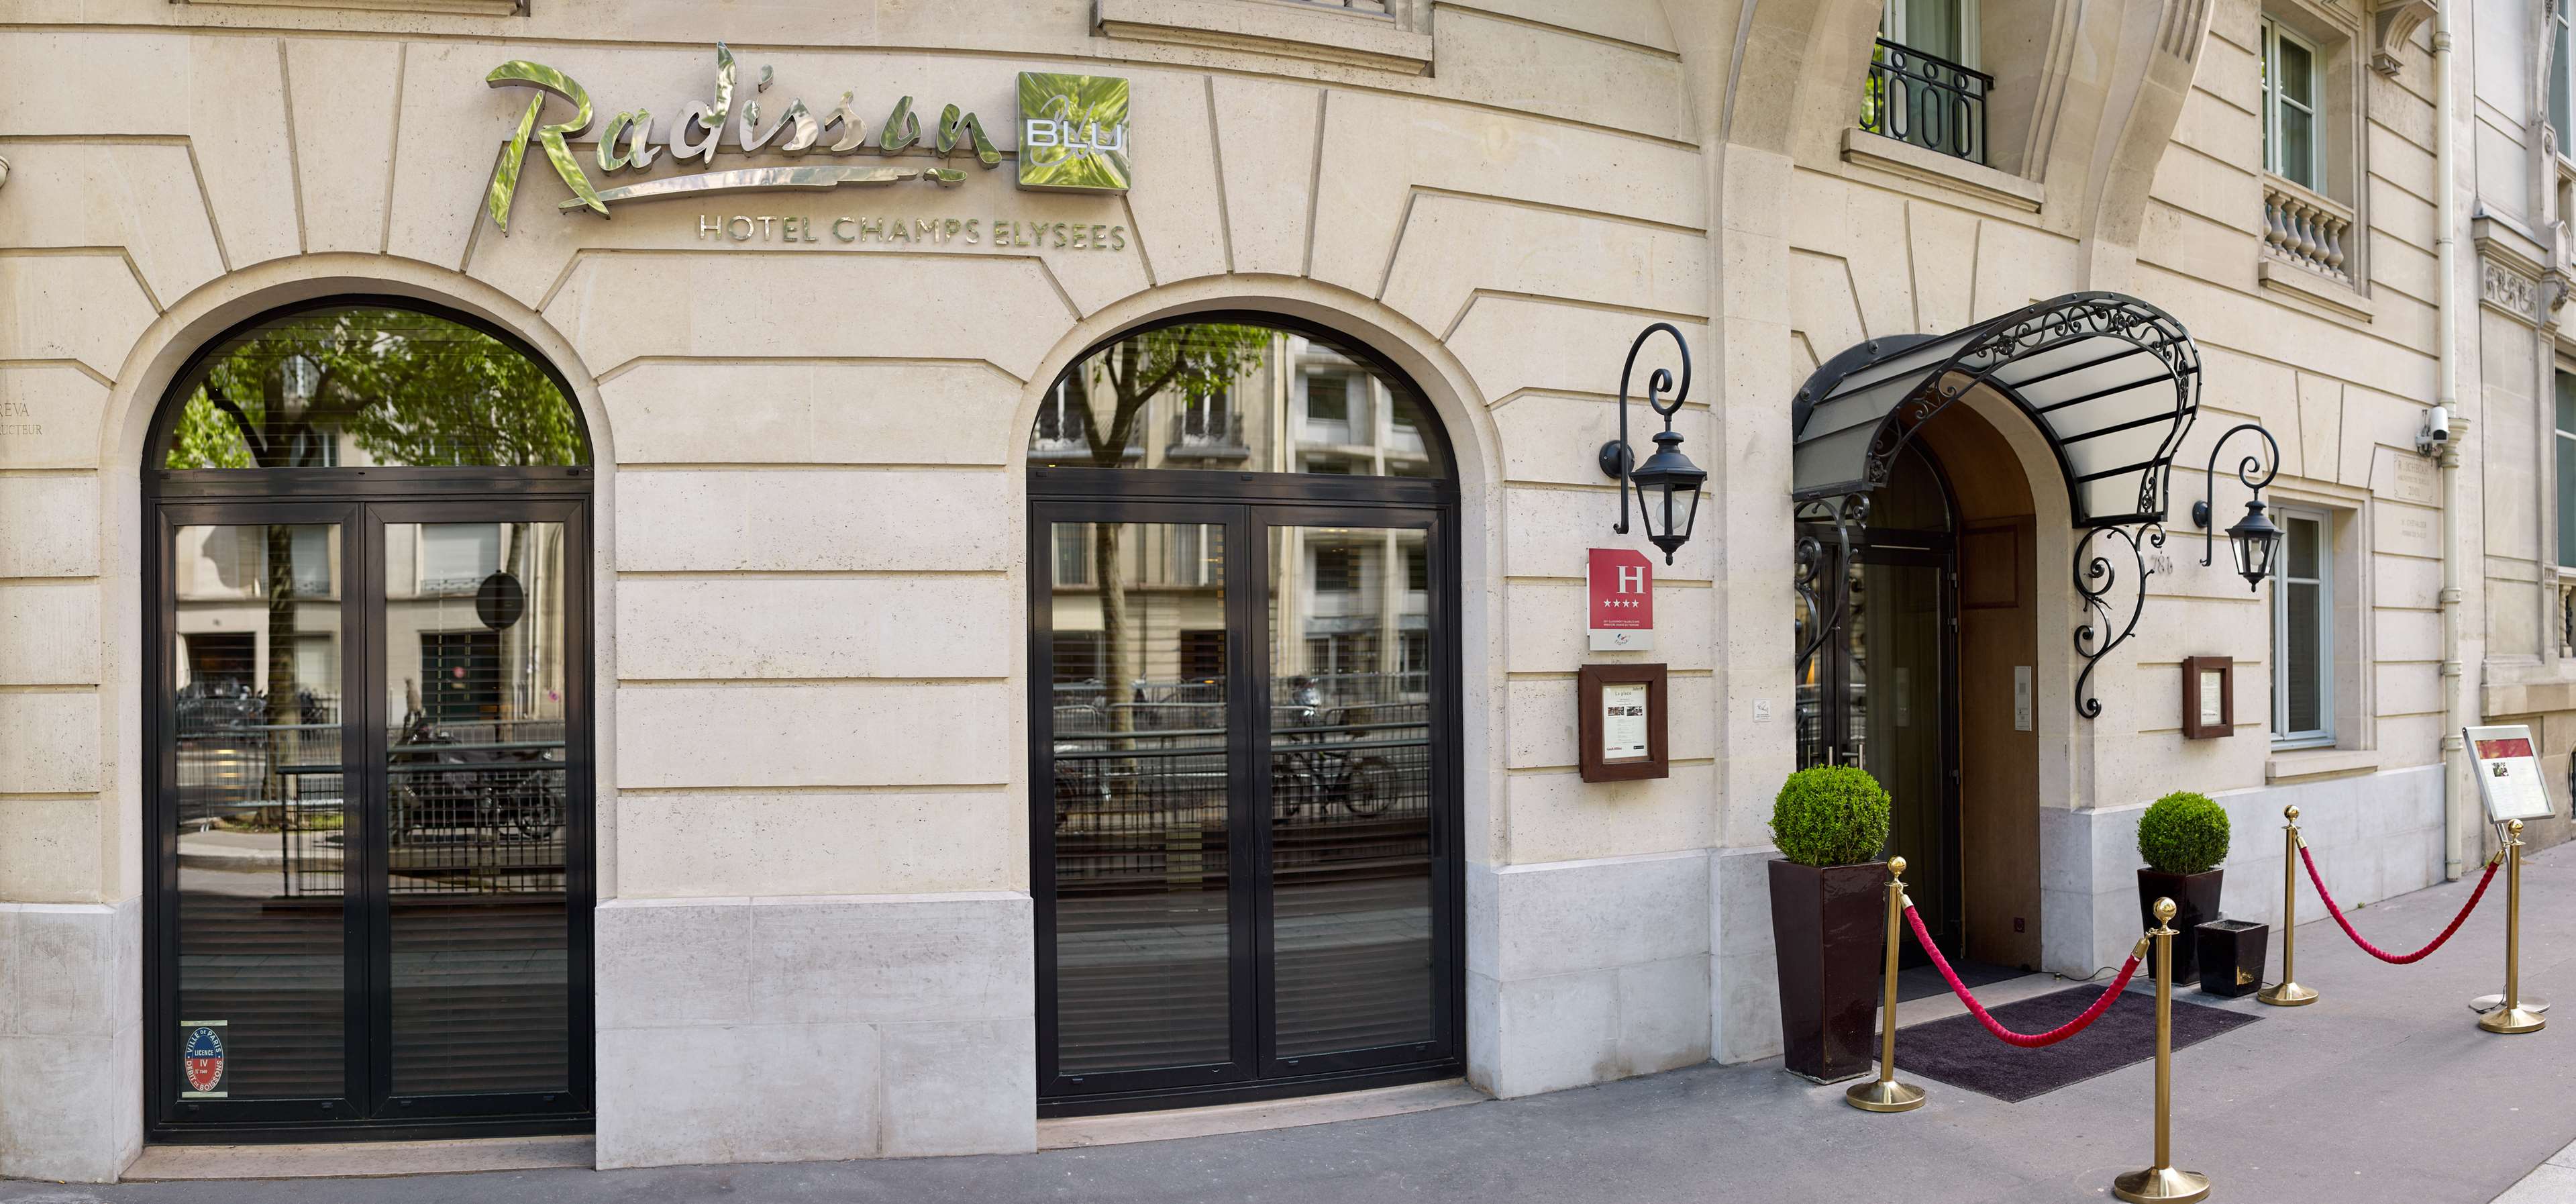 Images Radisson Blu Hotel Champs ElysÃ©es, Paris - closed